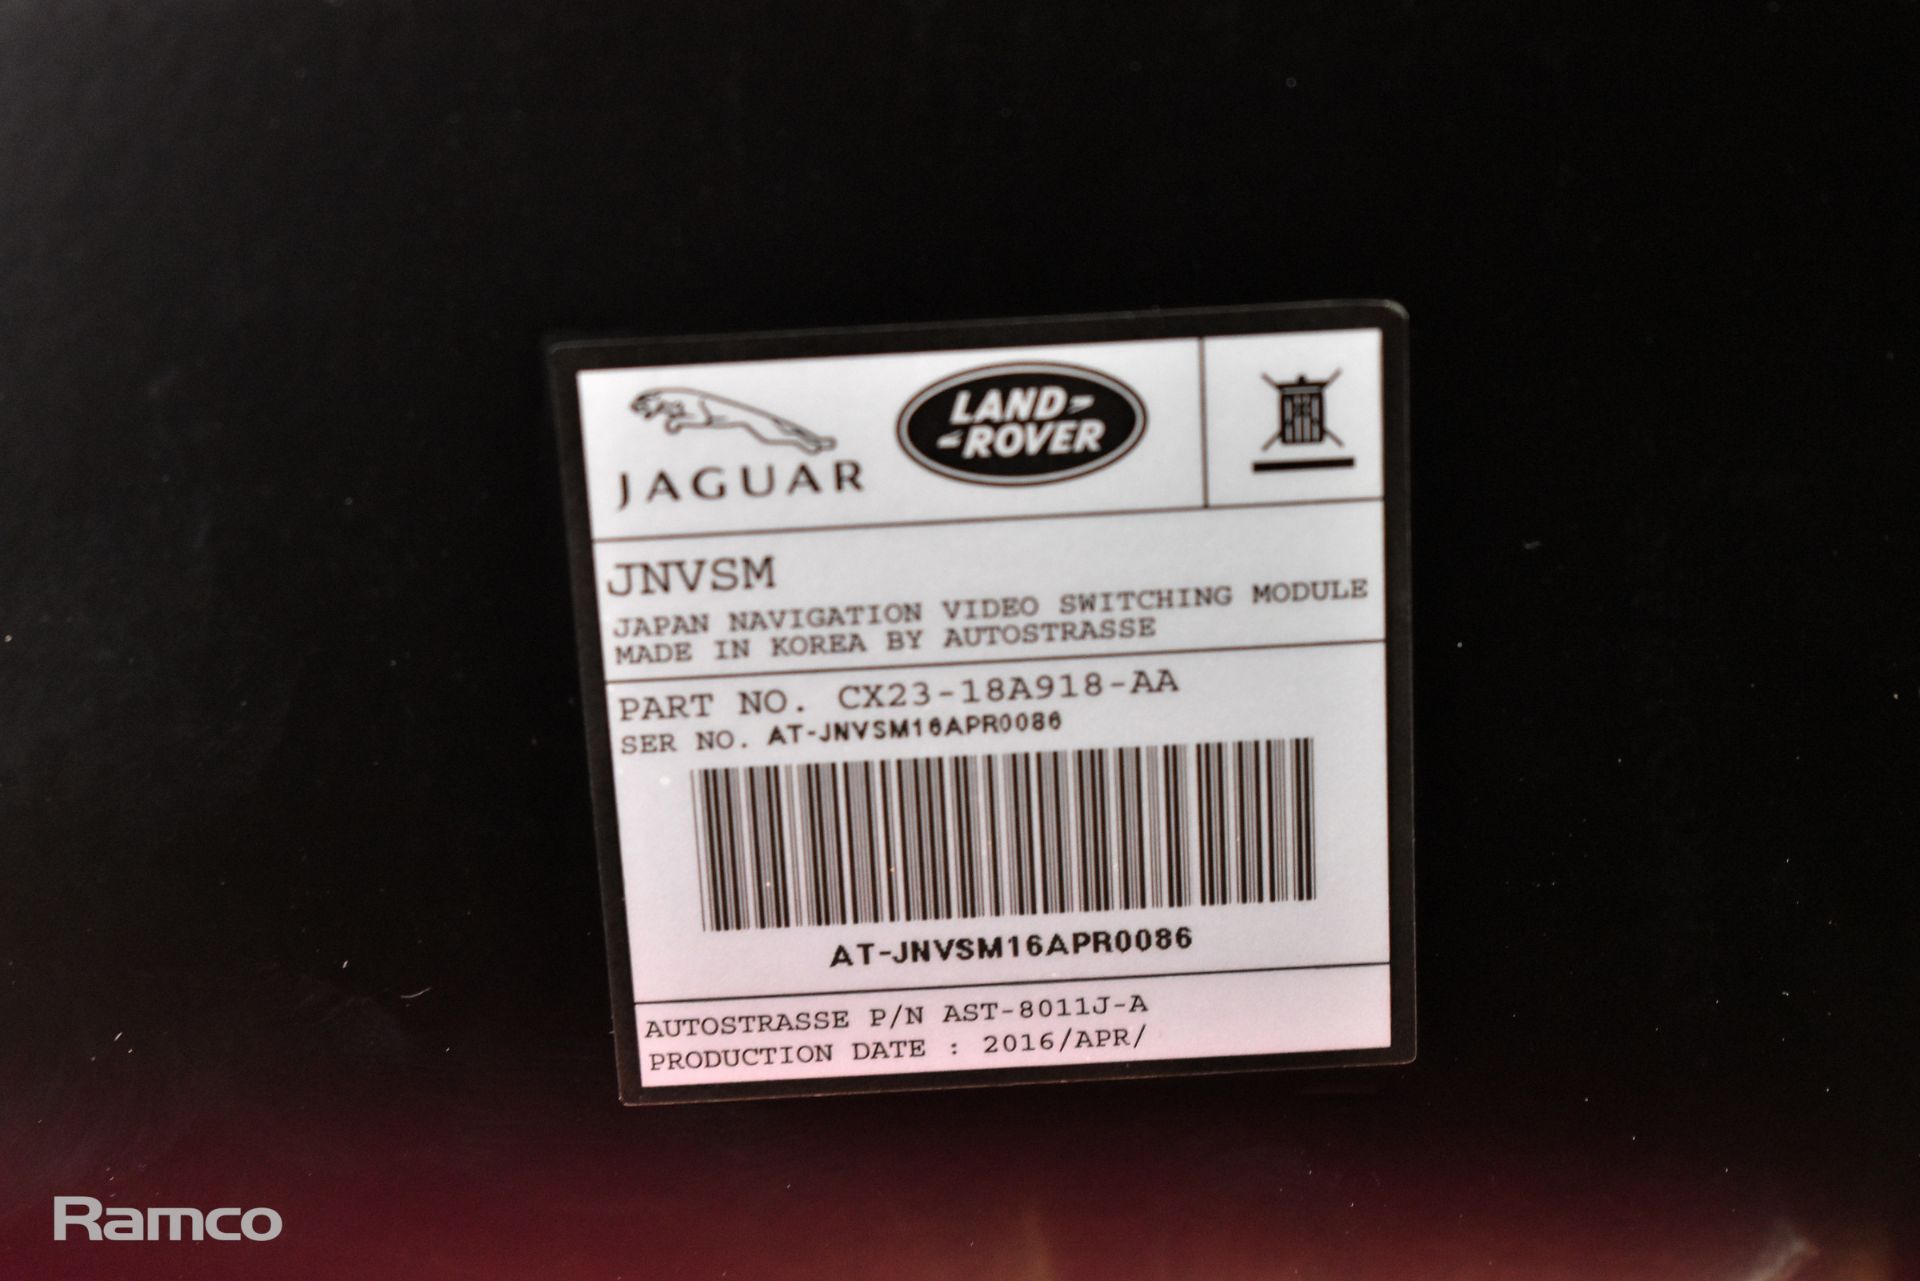 10x Land Rover / Jaguar sat nav units - Image 2 of 2